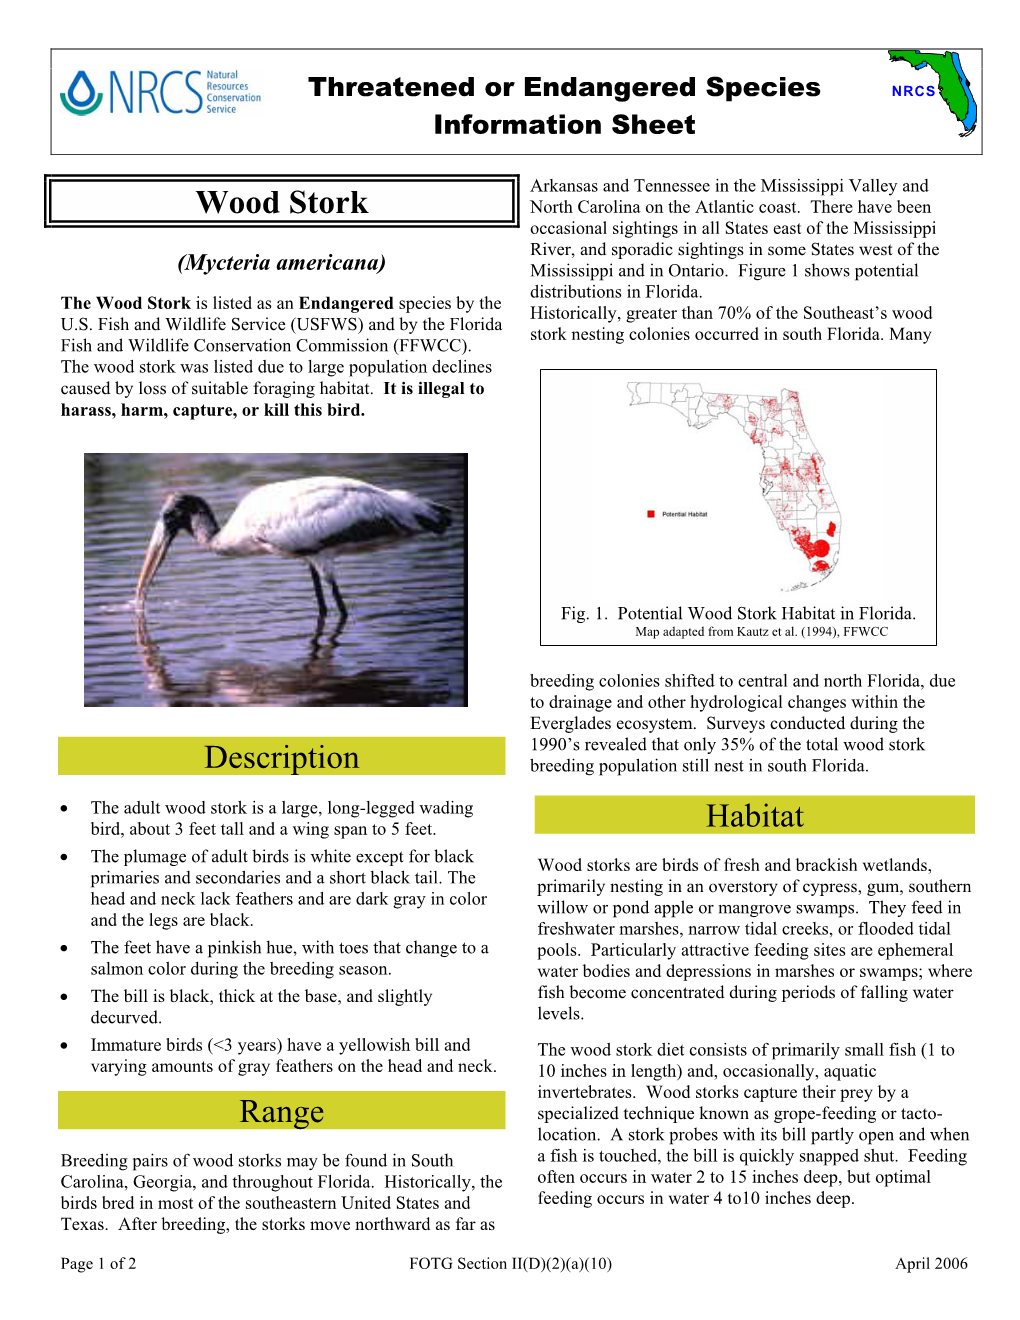 Wood Stork North Carolina on the Atlantic Coast